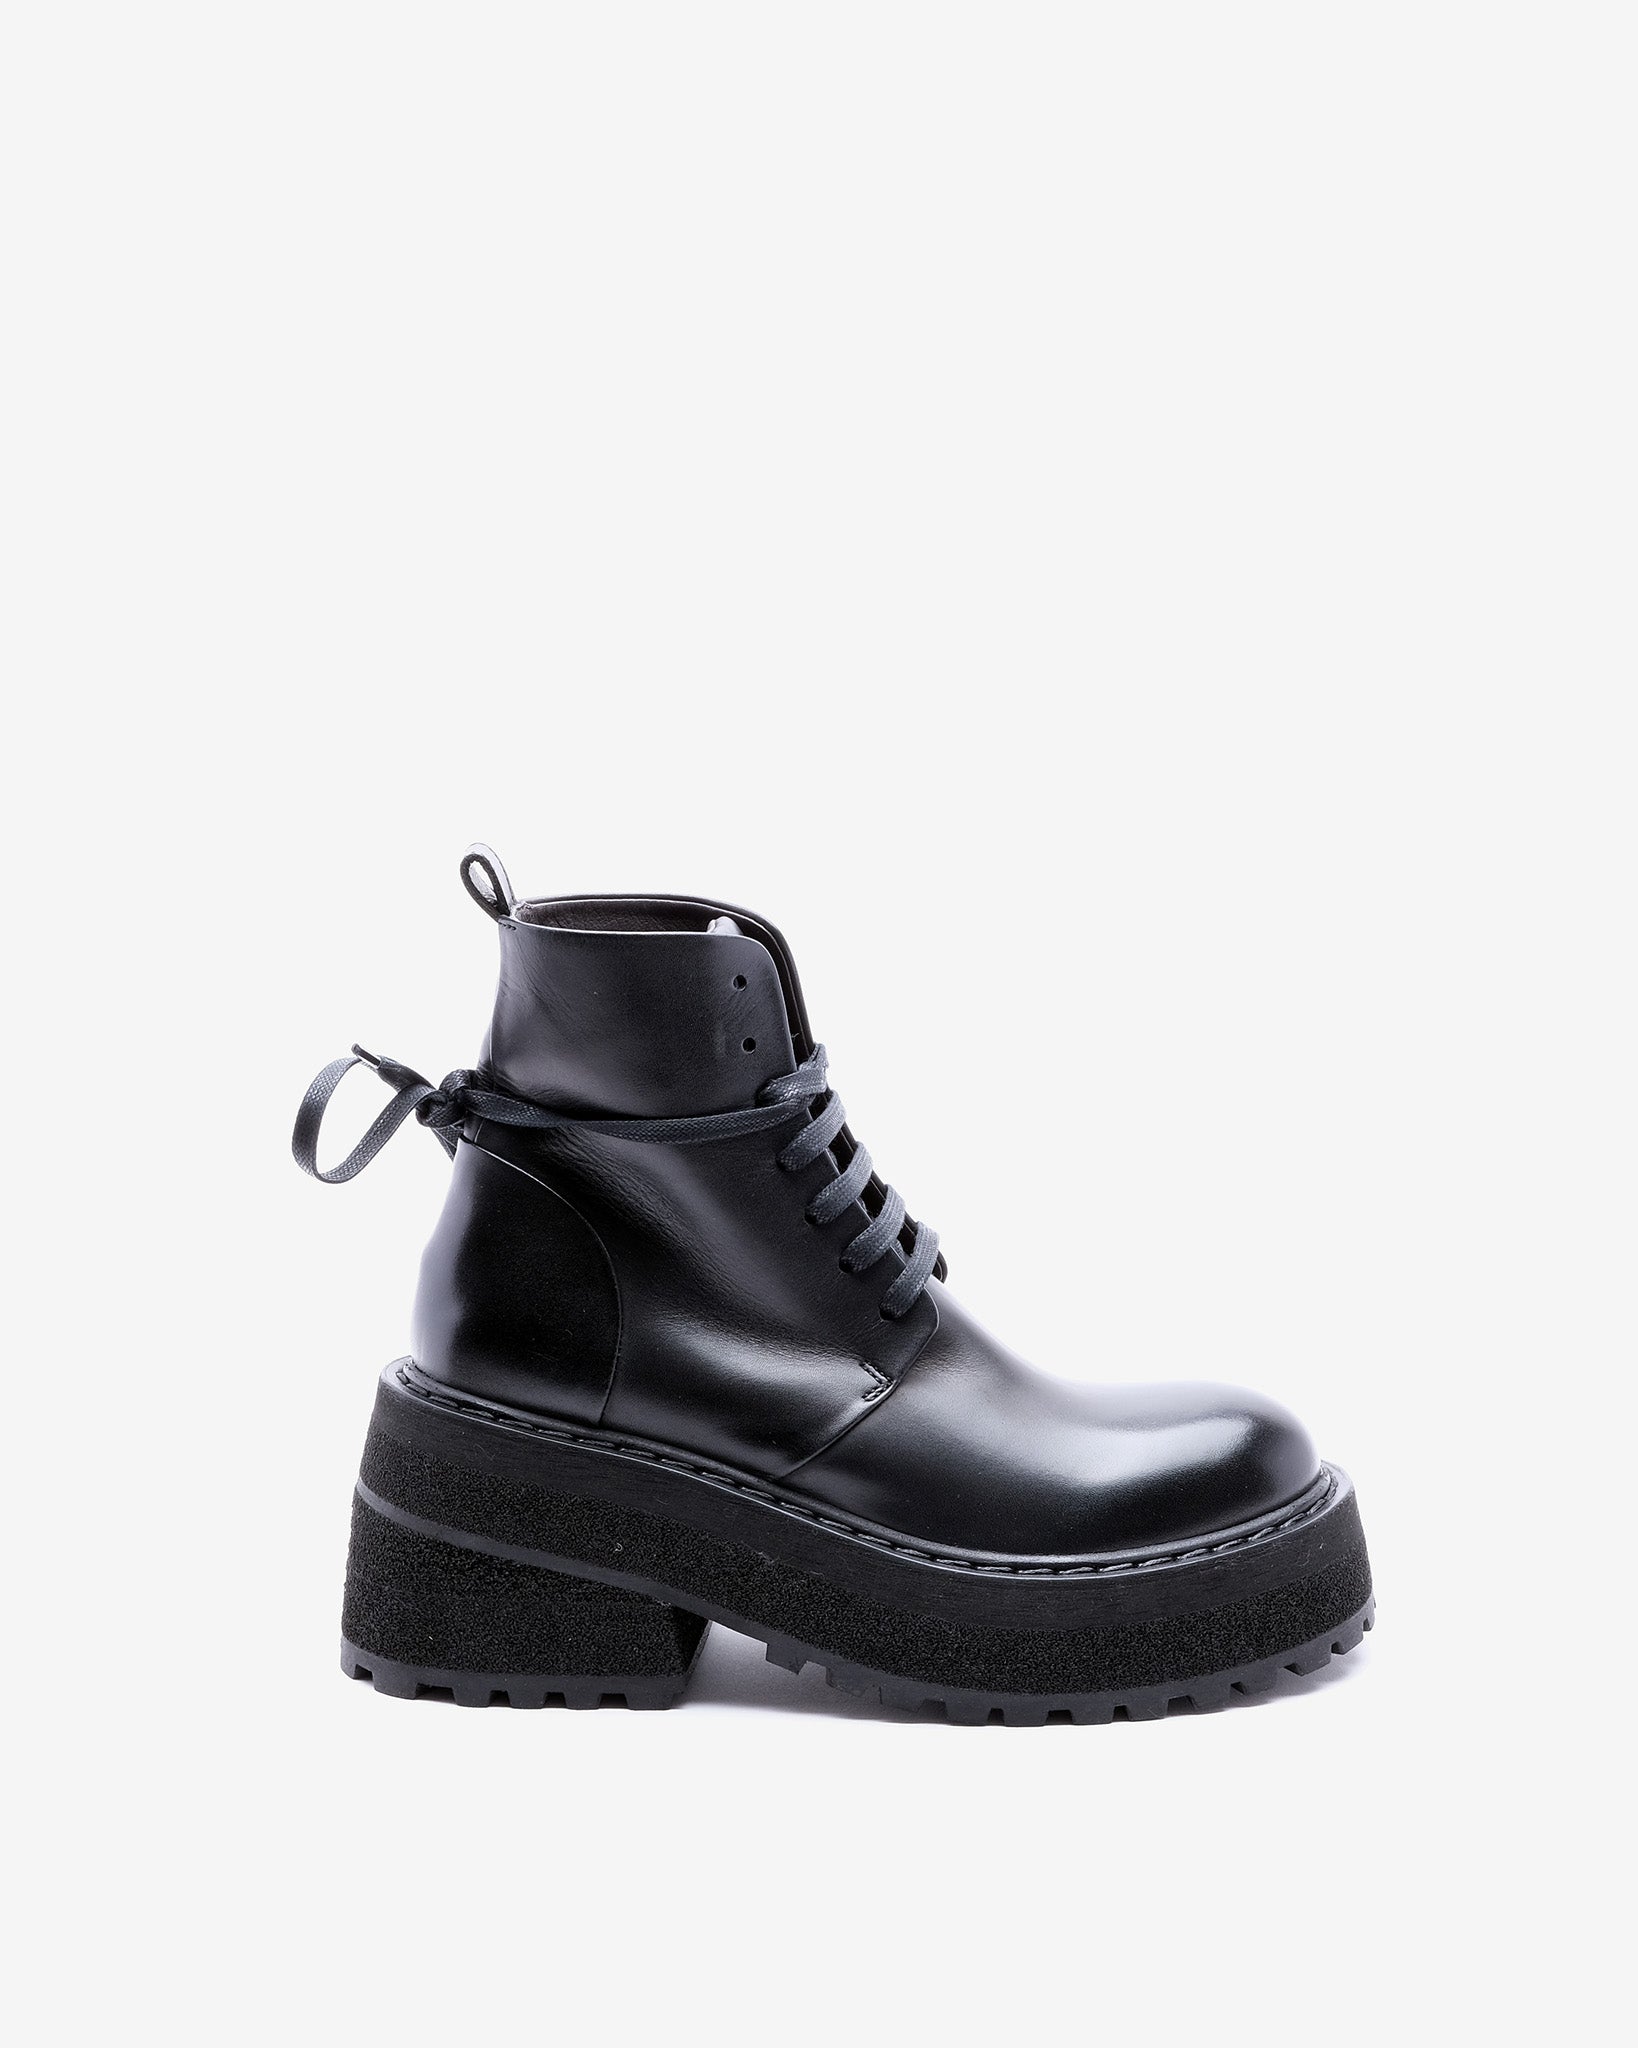 Carretta MW5596 Black Leather Boots